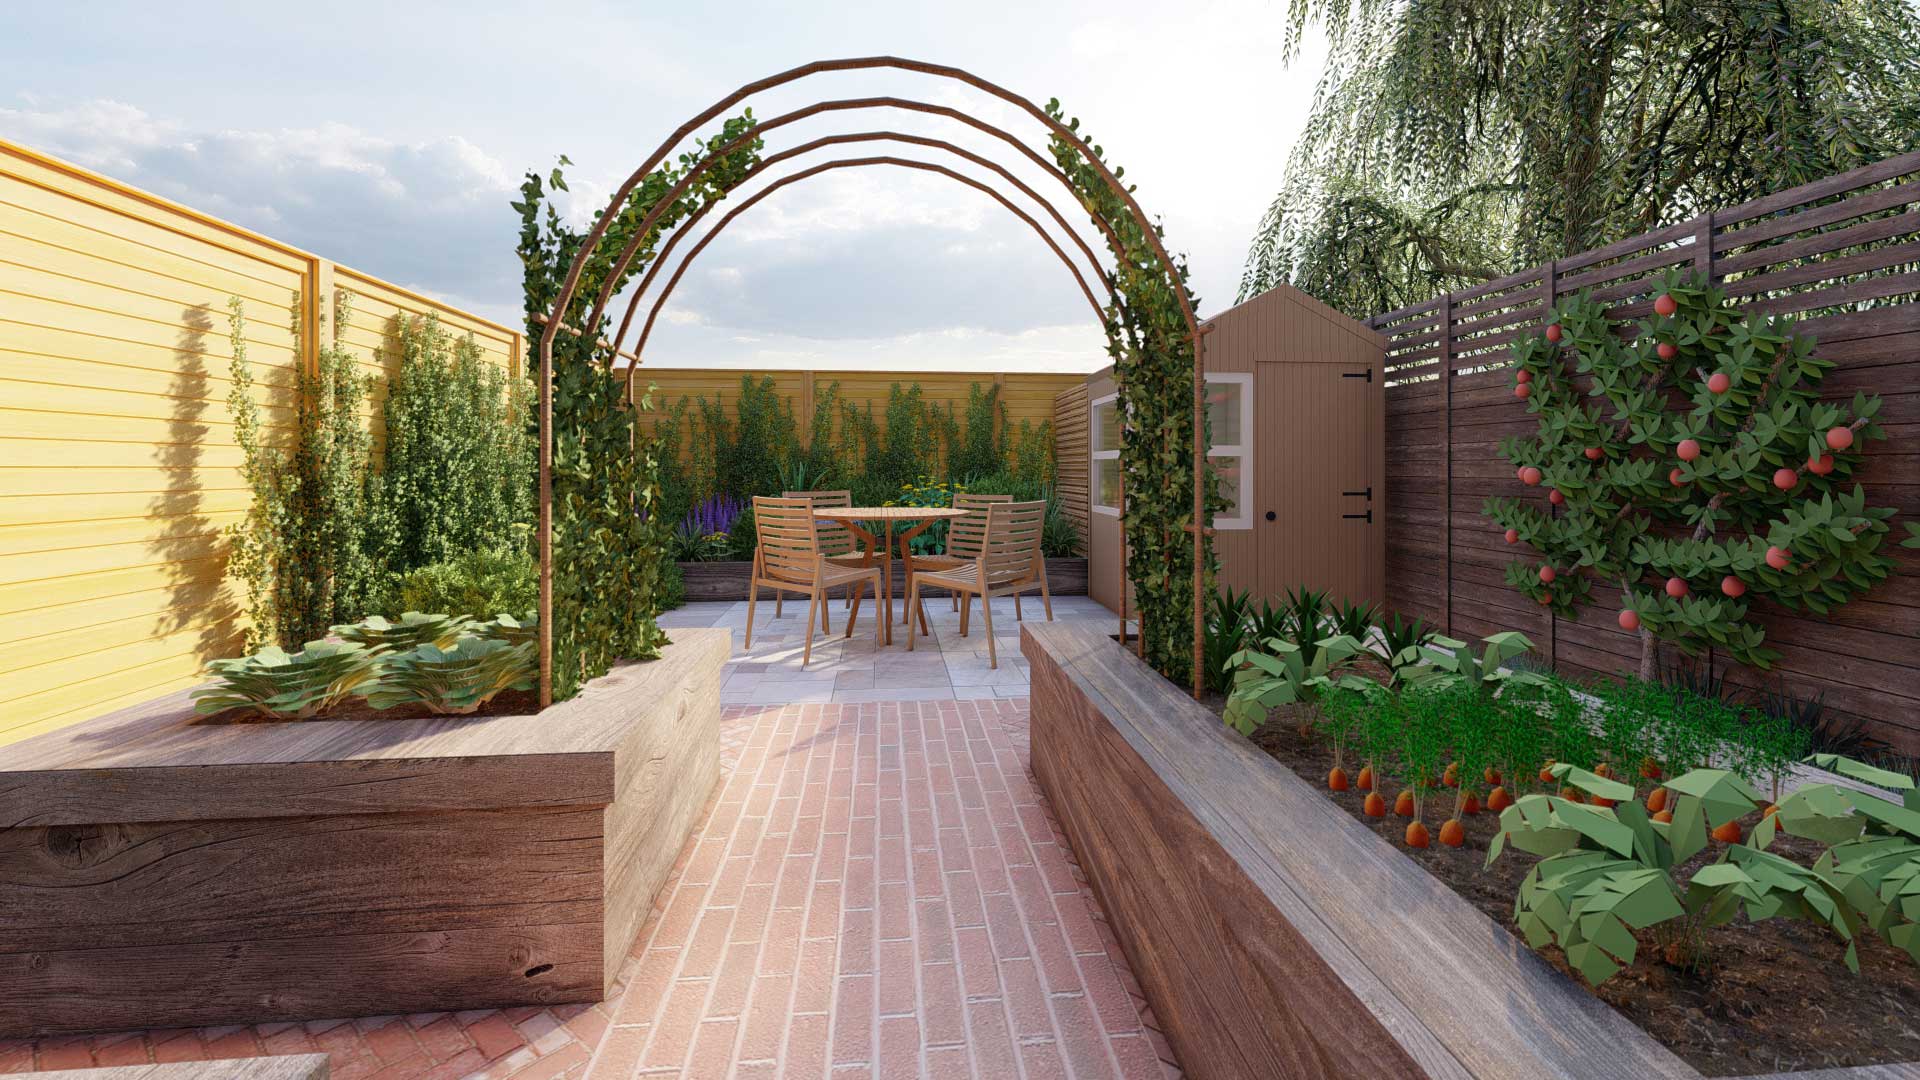 Oak raised vegetable bed garden design with hazel arches